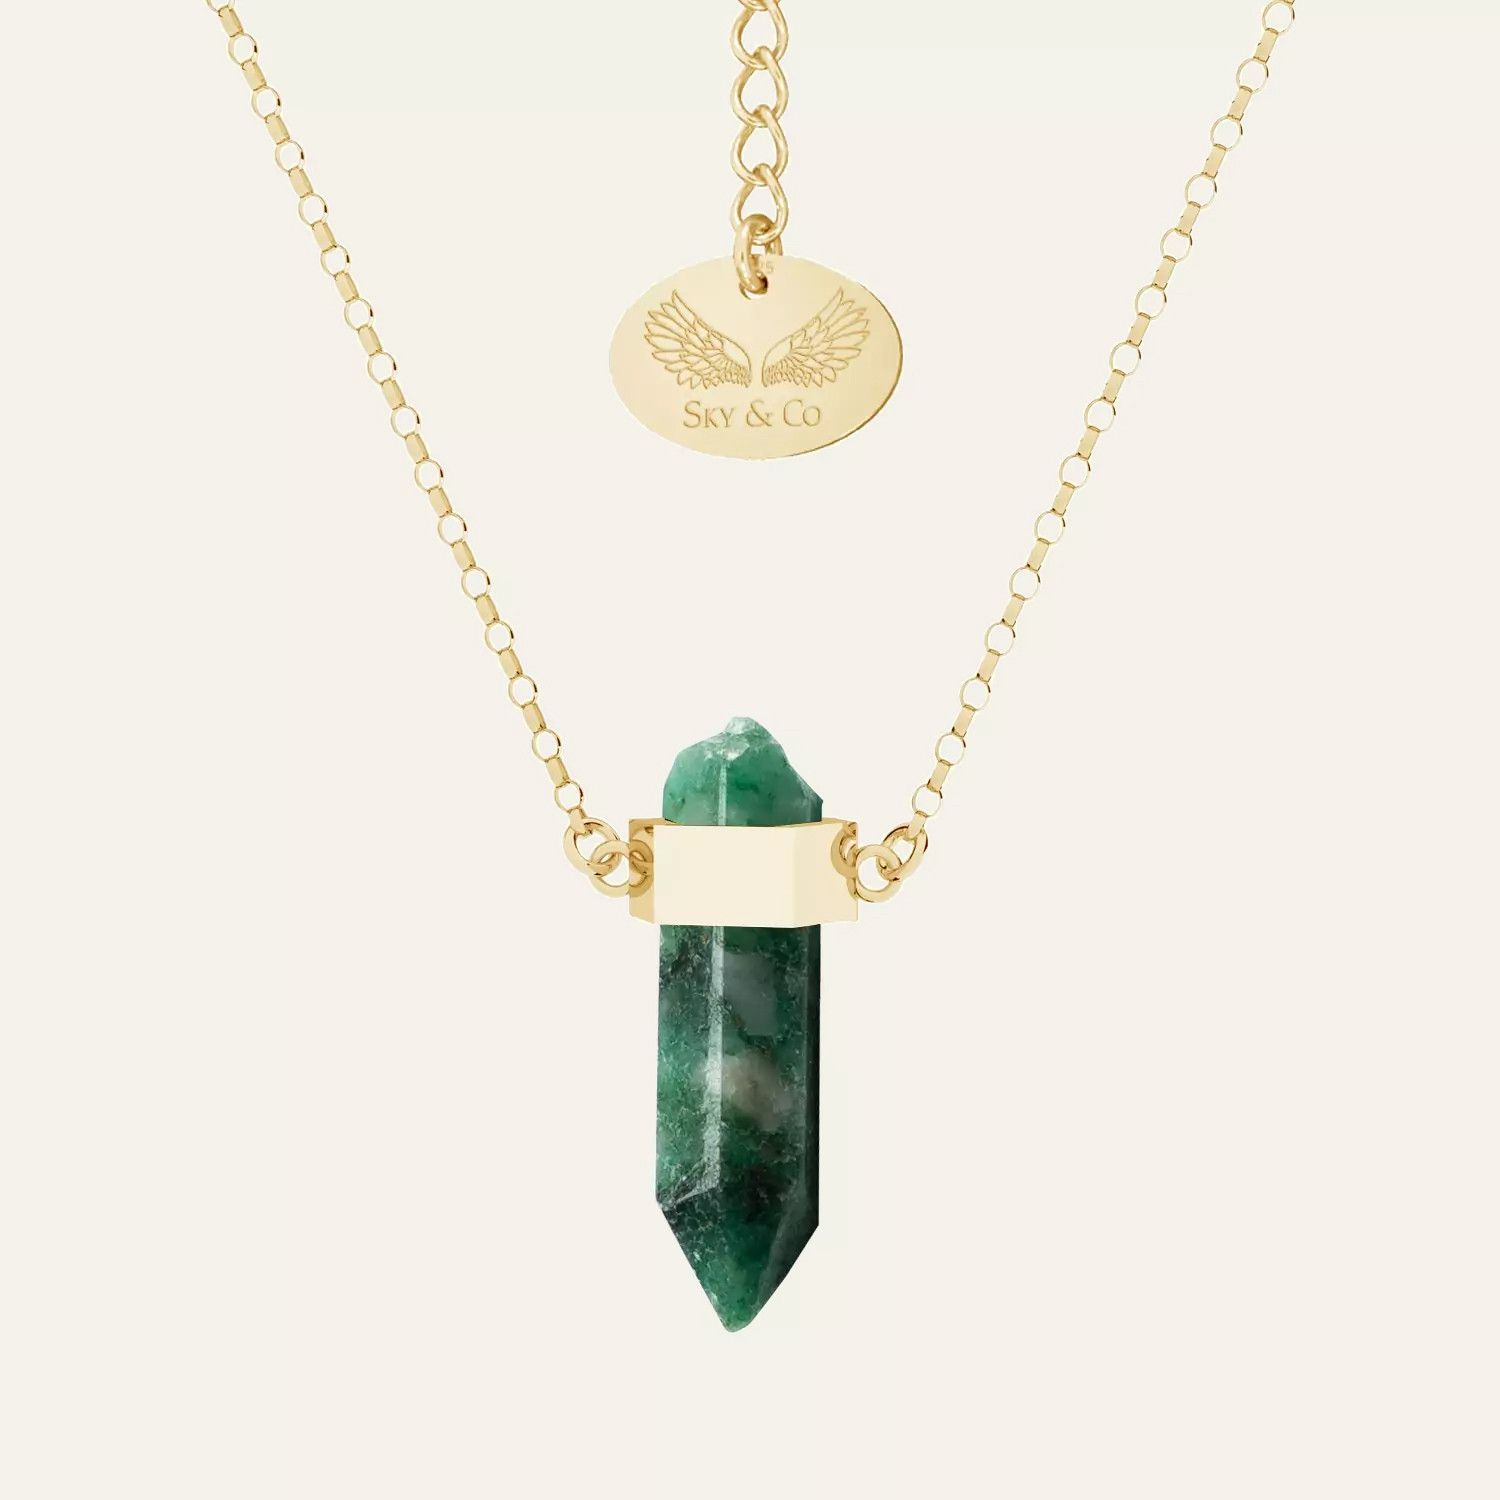 Ezoteriq necklace with mountain stone, Sky&Co, sterling silver 925